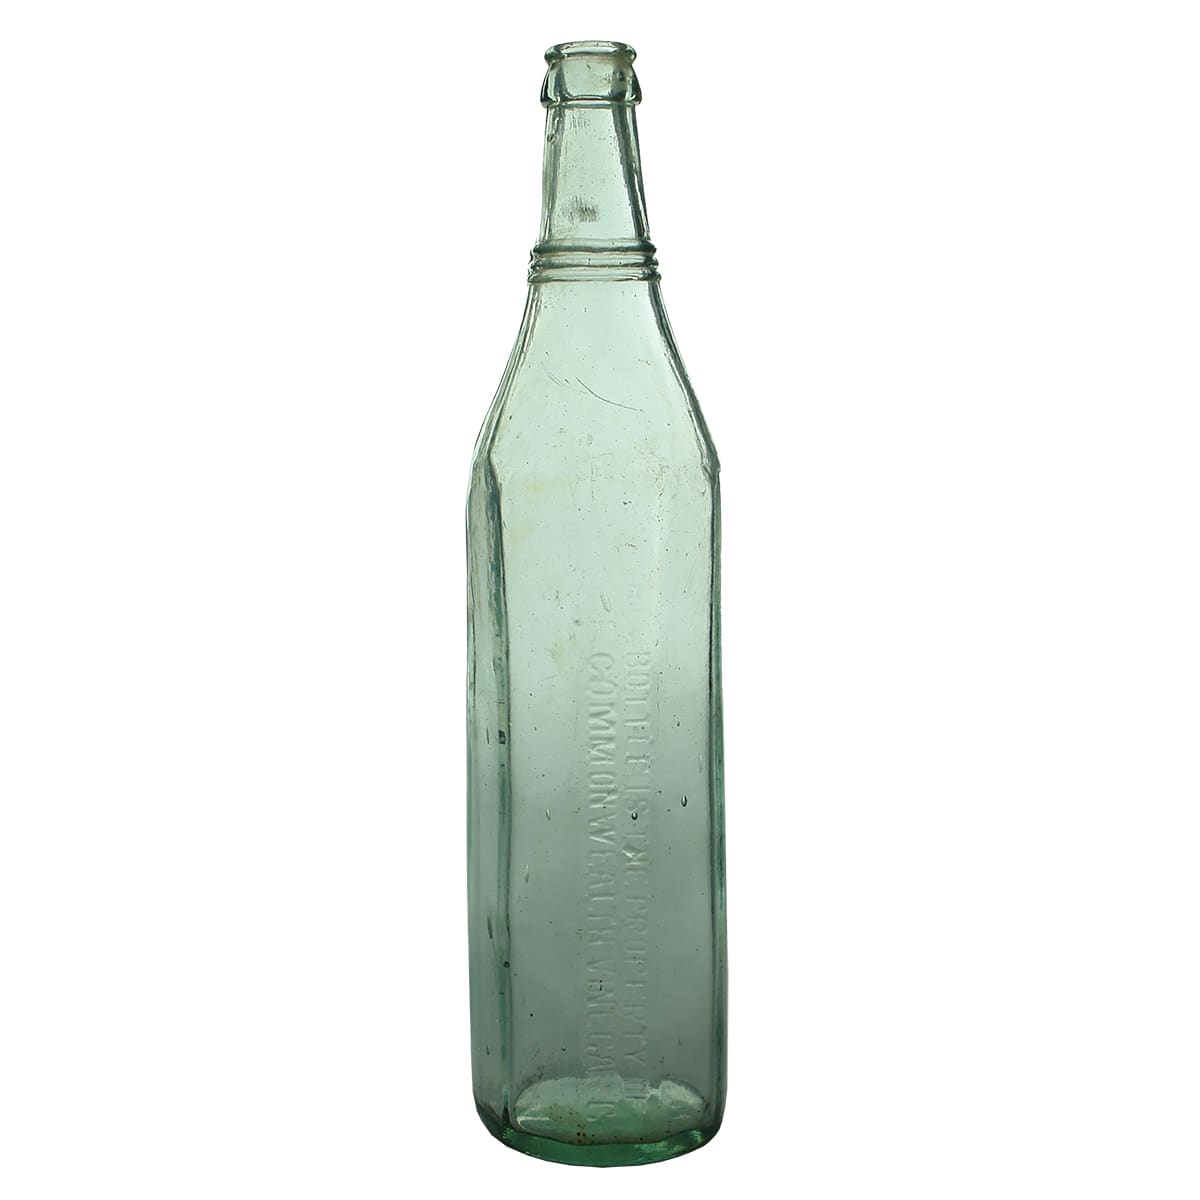 Vinegar. Commonwealth Vinegar Co. Aqua. 26 oz.